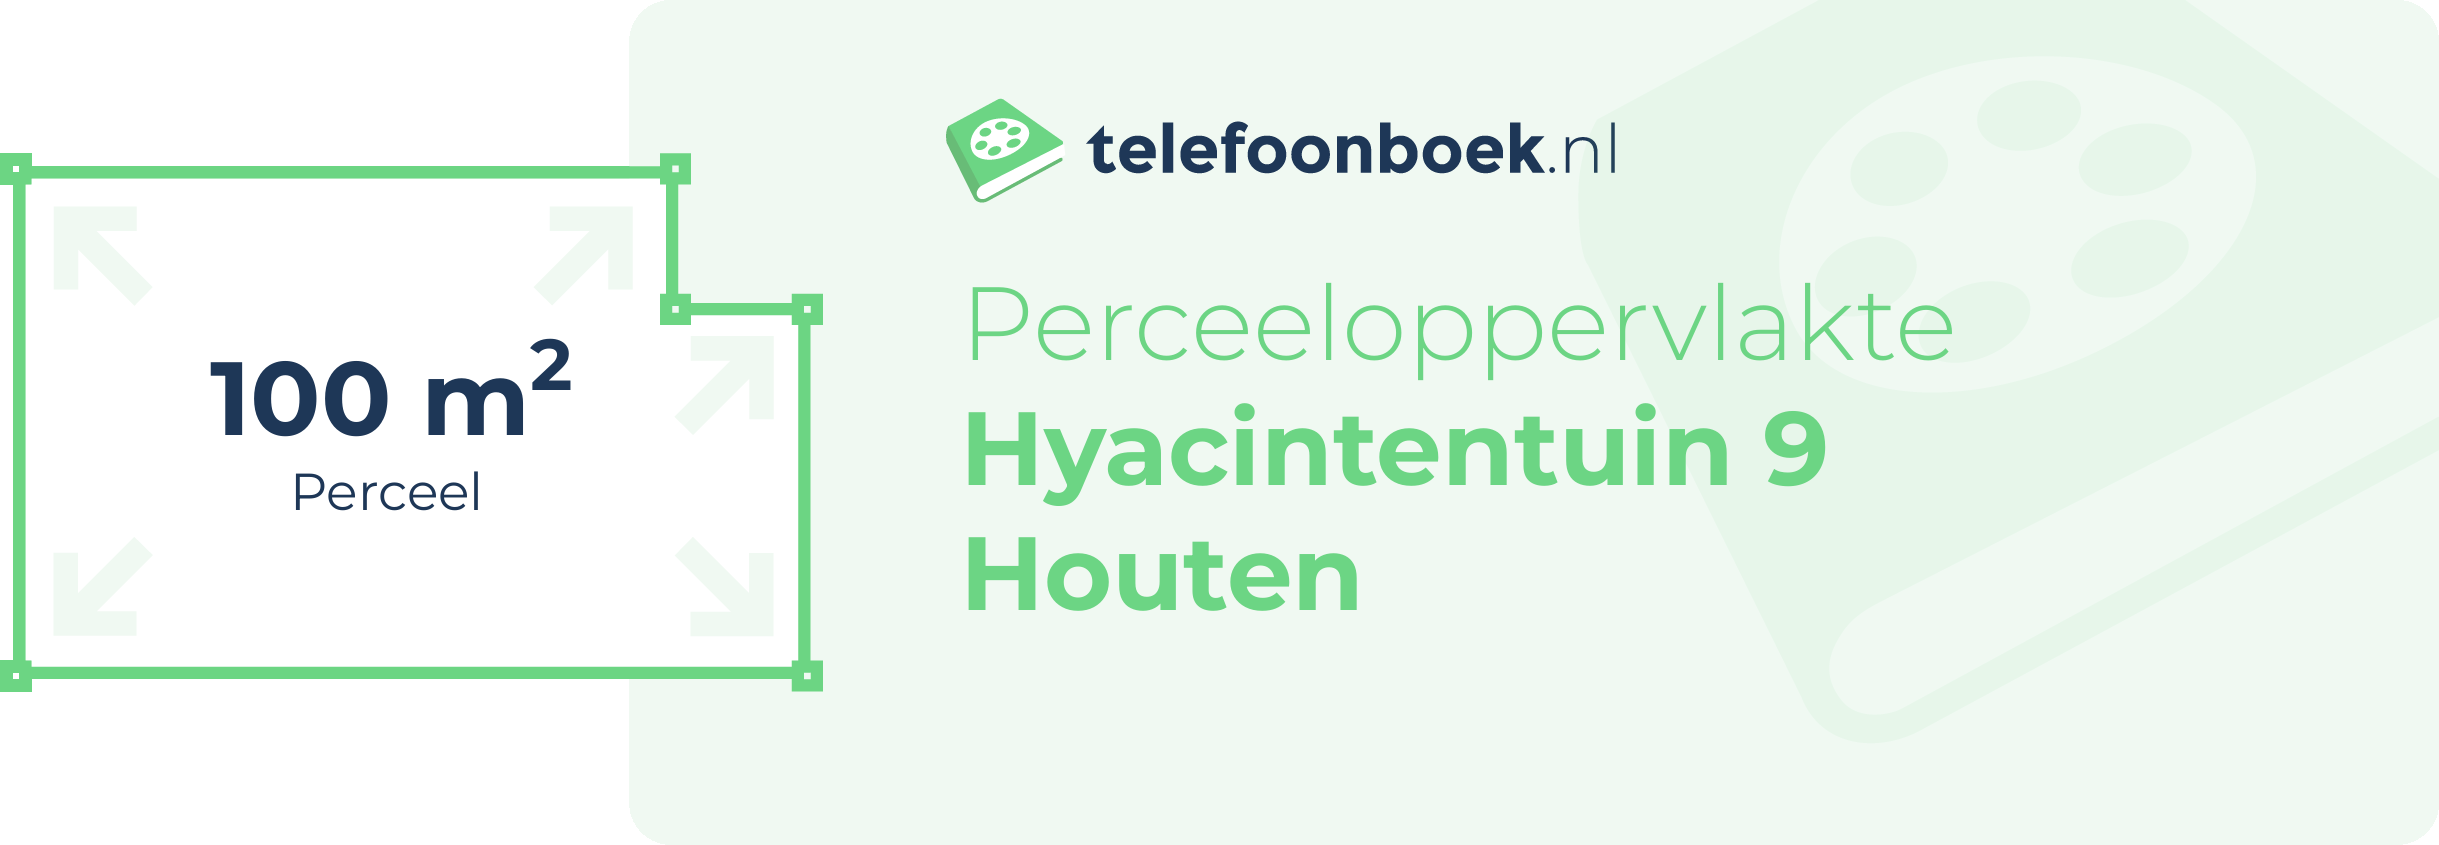 Perceeloppervlakte Hyacintentuin 9 Houten